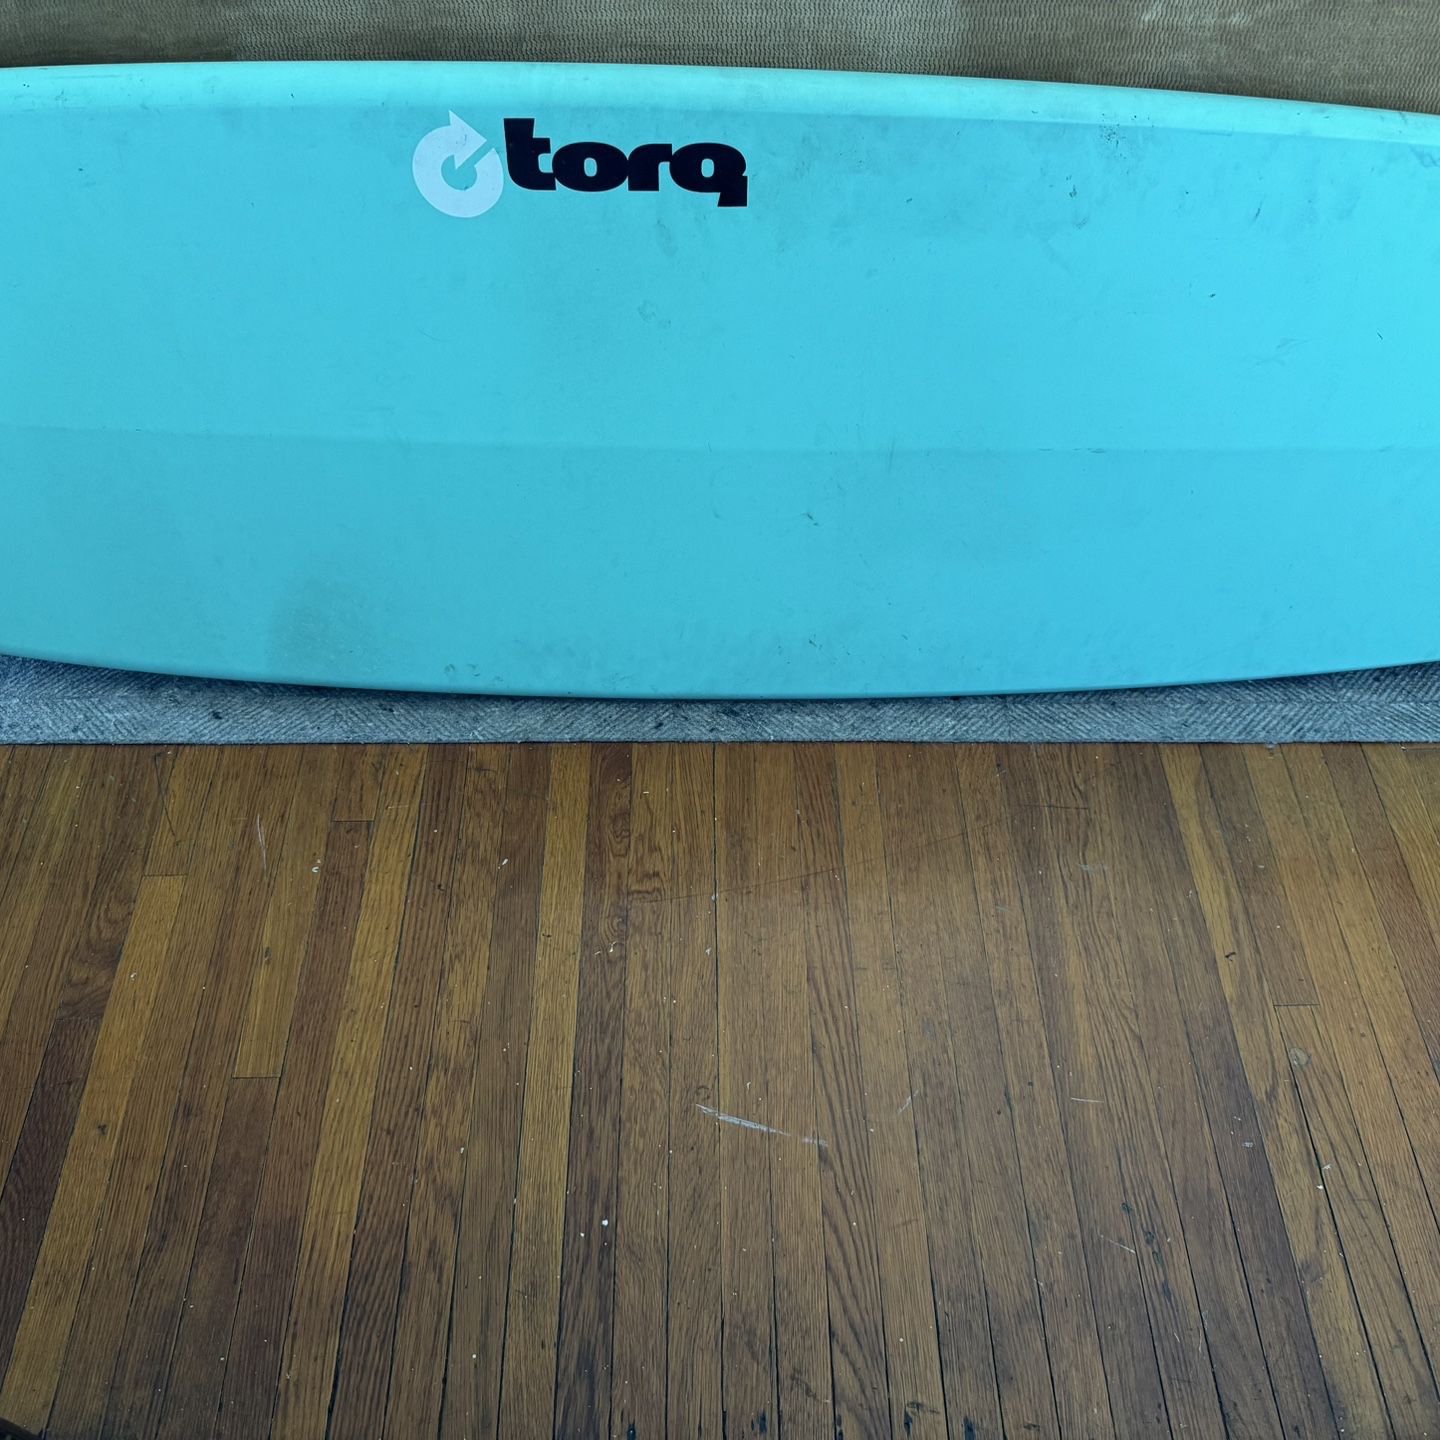 Torq Surfboard 